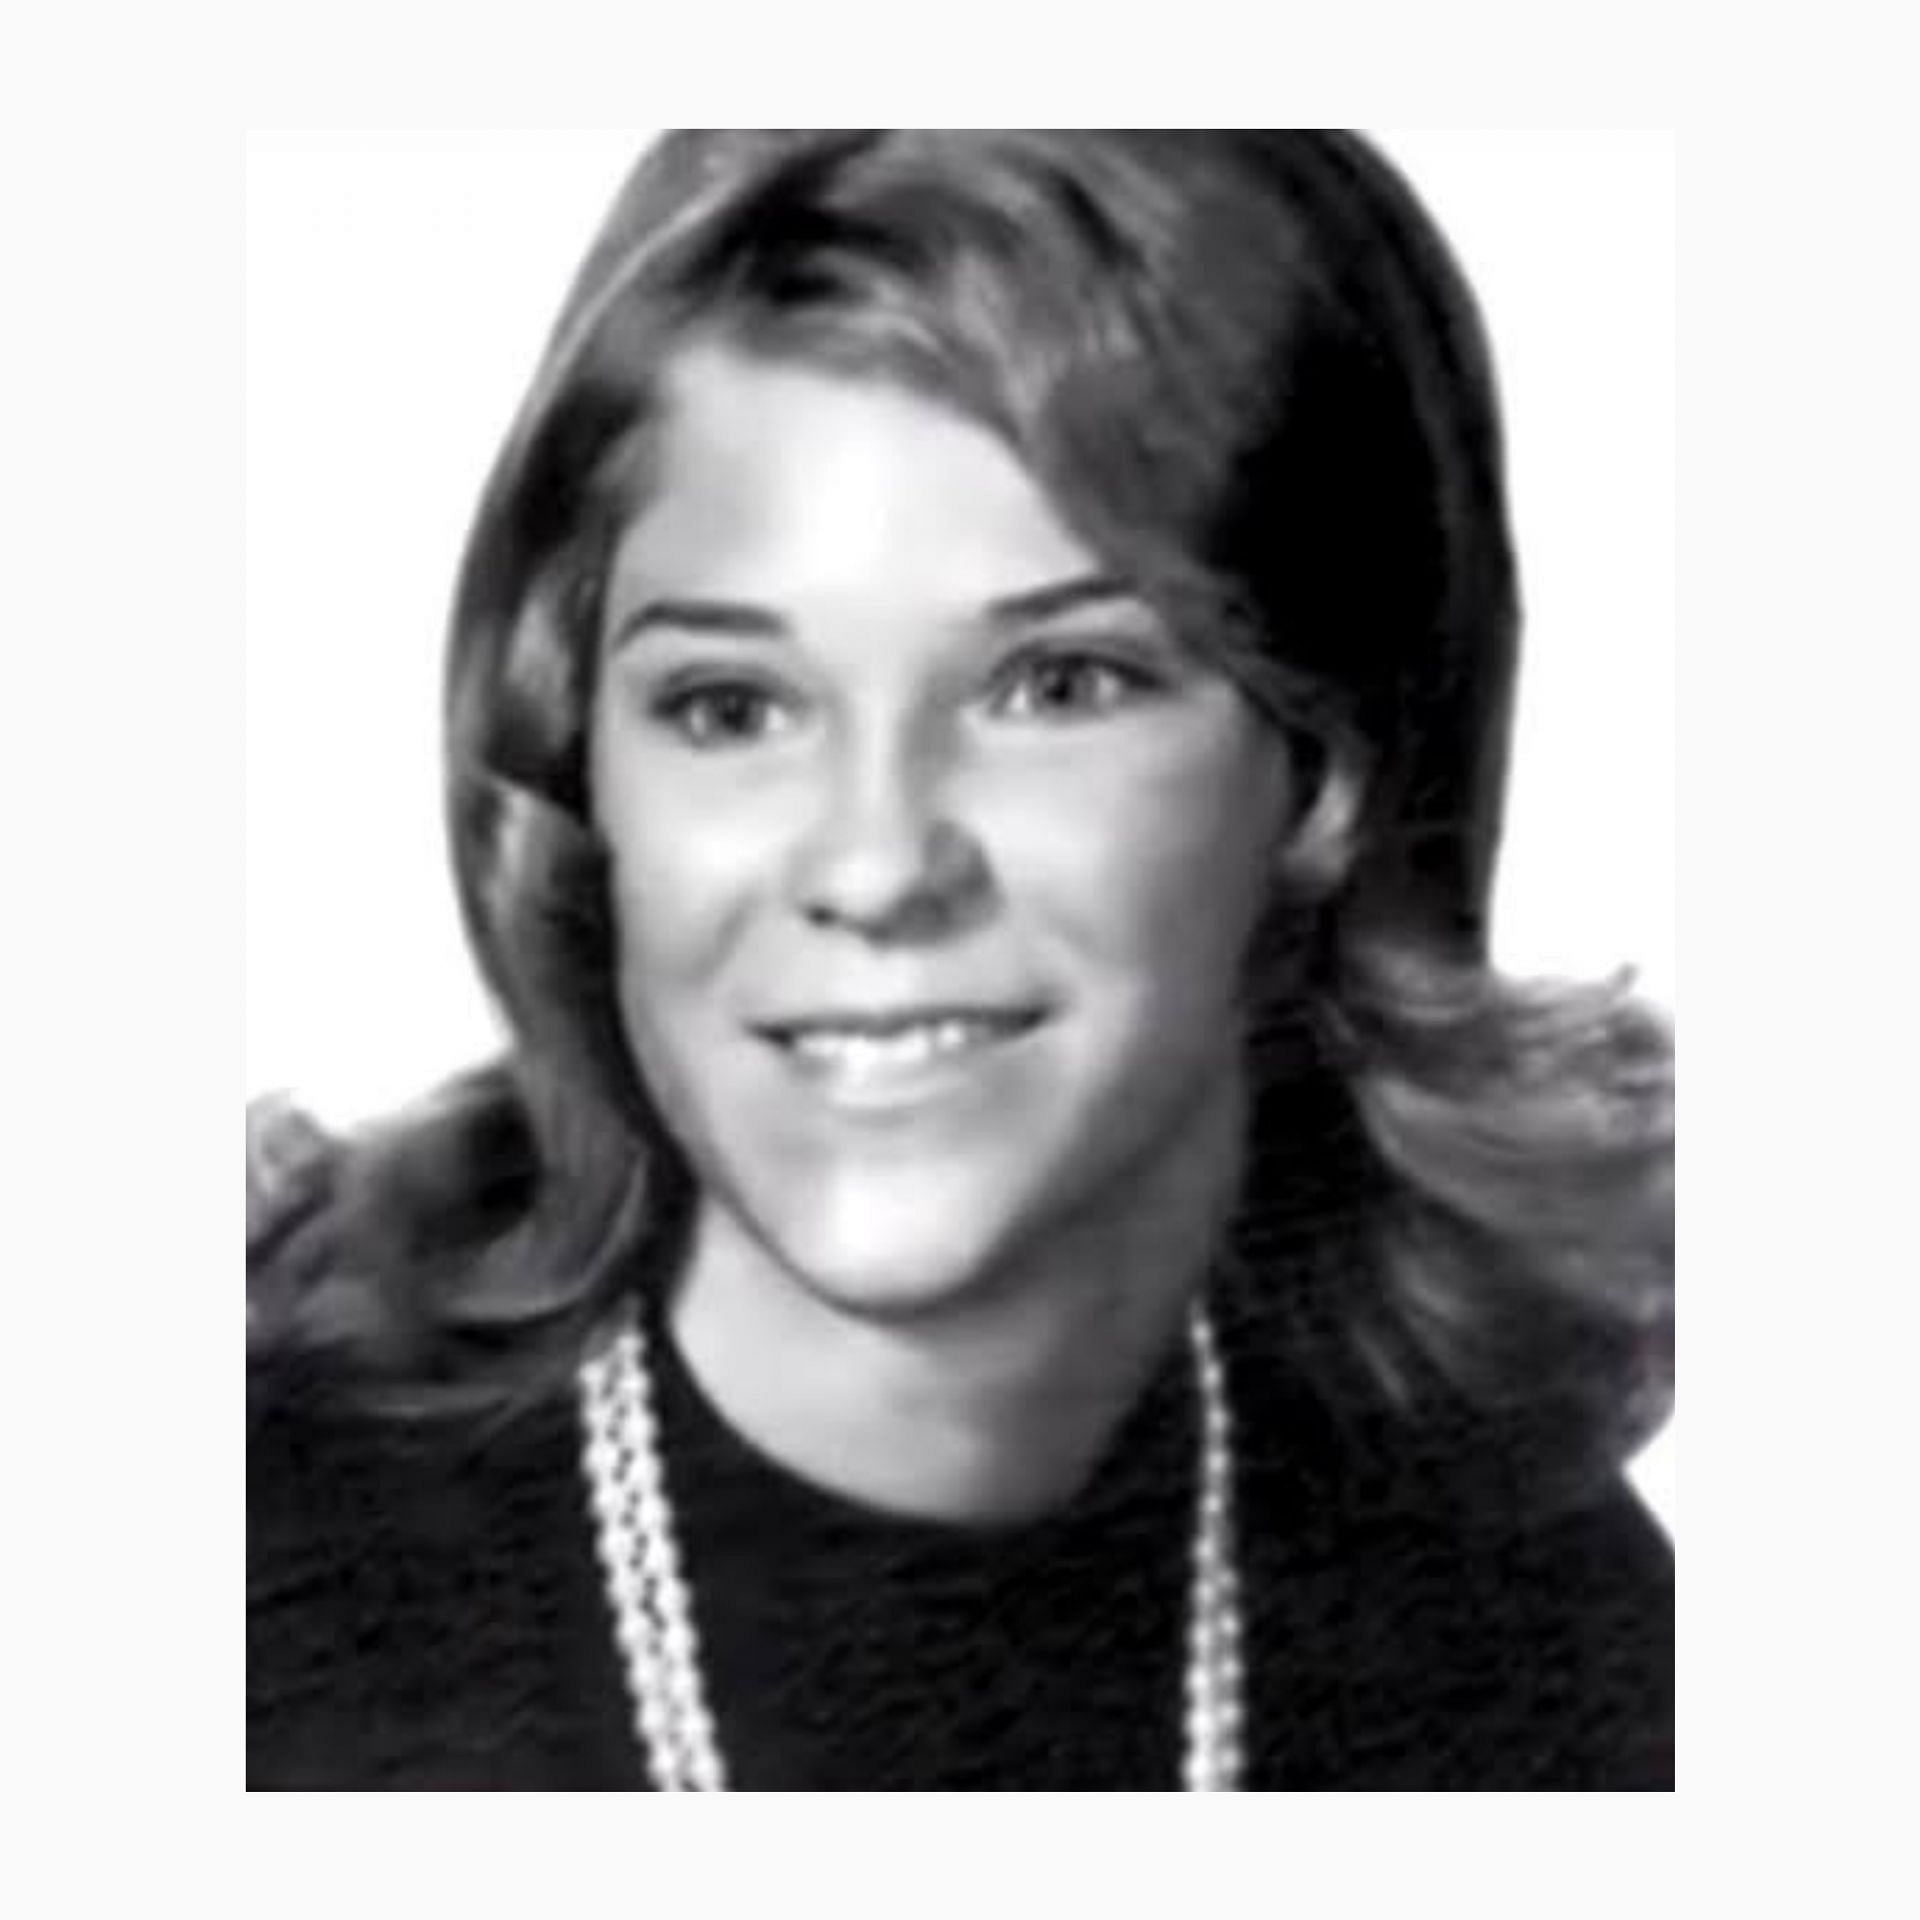 Janice Hartman (Image via Forensic Files Wiki)